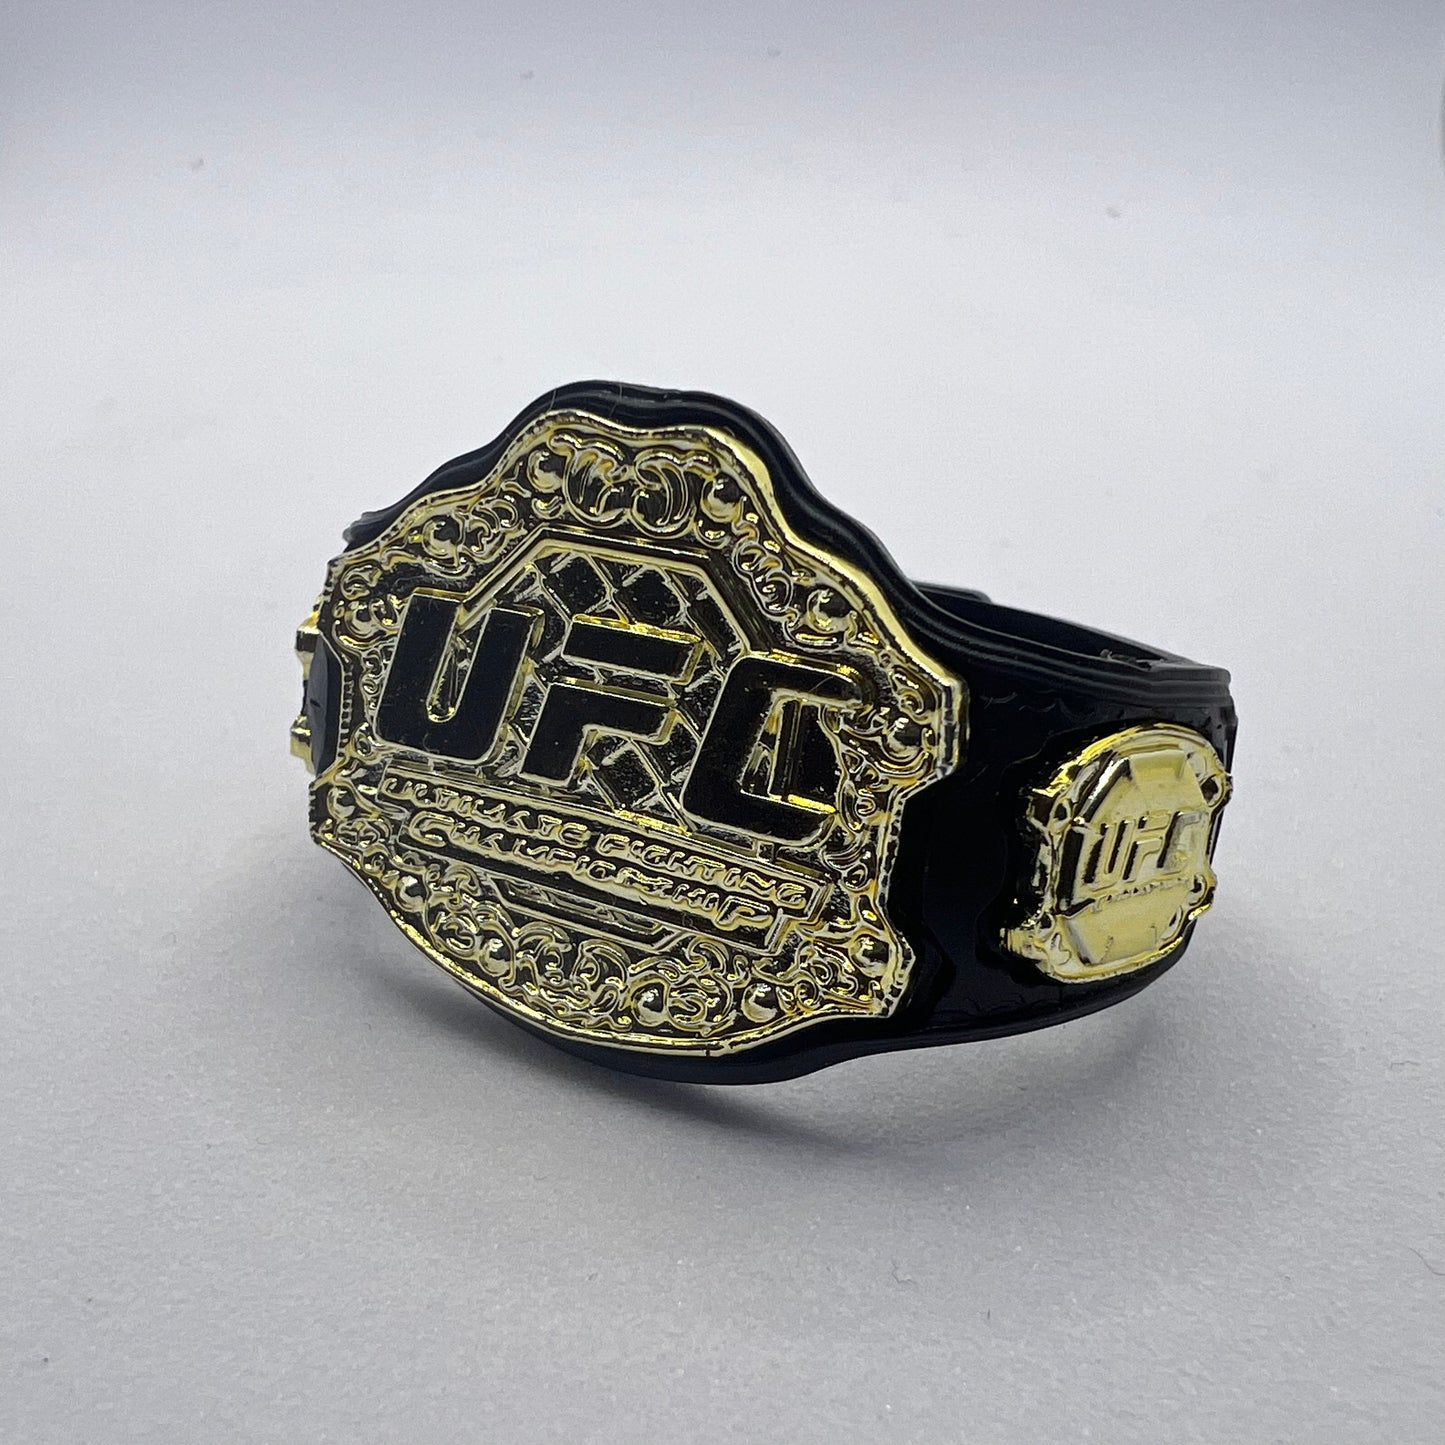 UFC Ultimate Fighter World Championship - UFC Action Figure Toy Belt for Action Figure